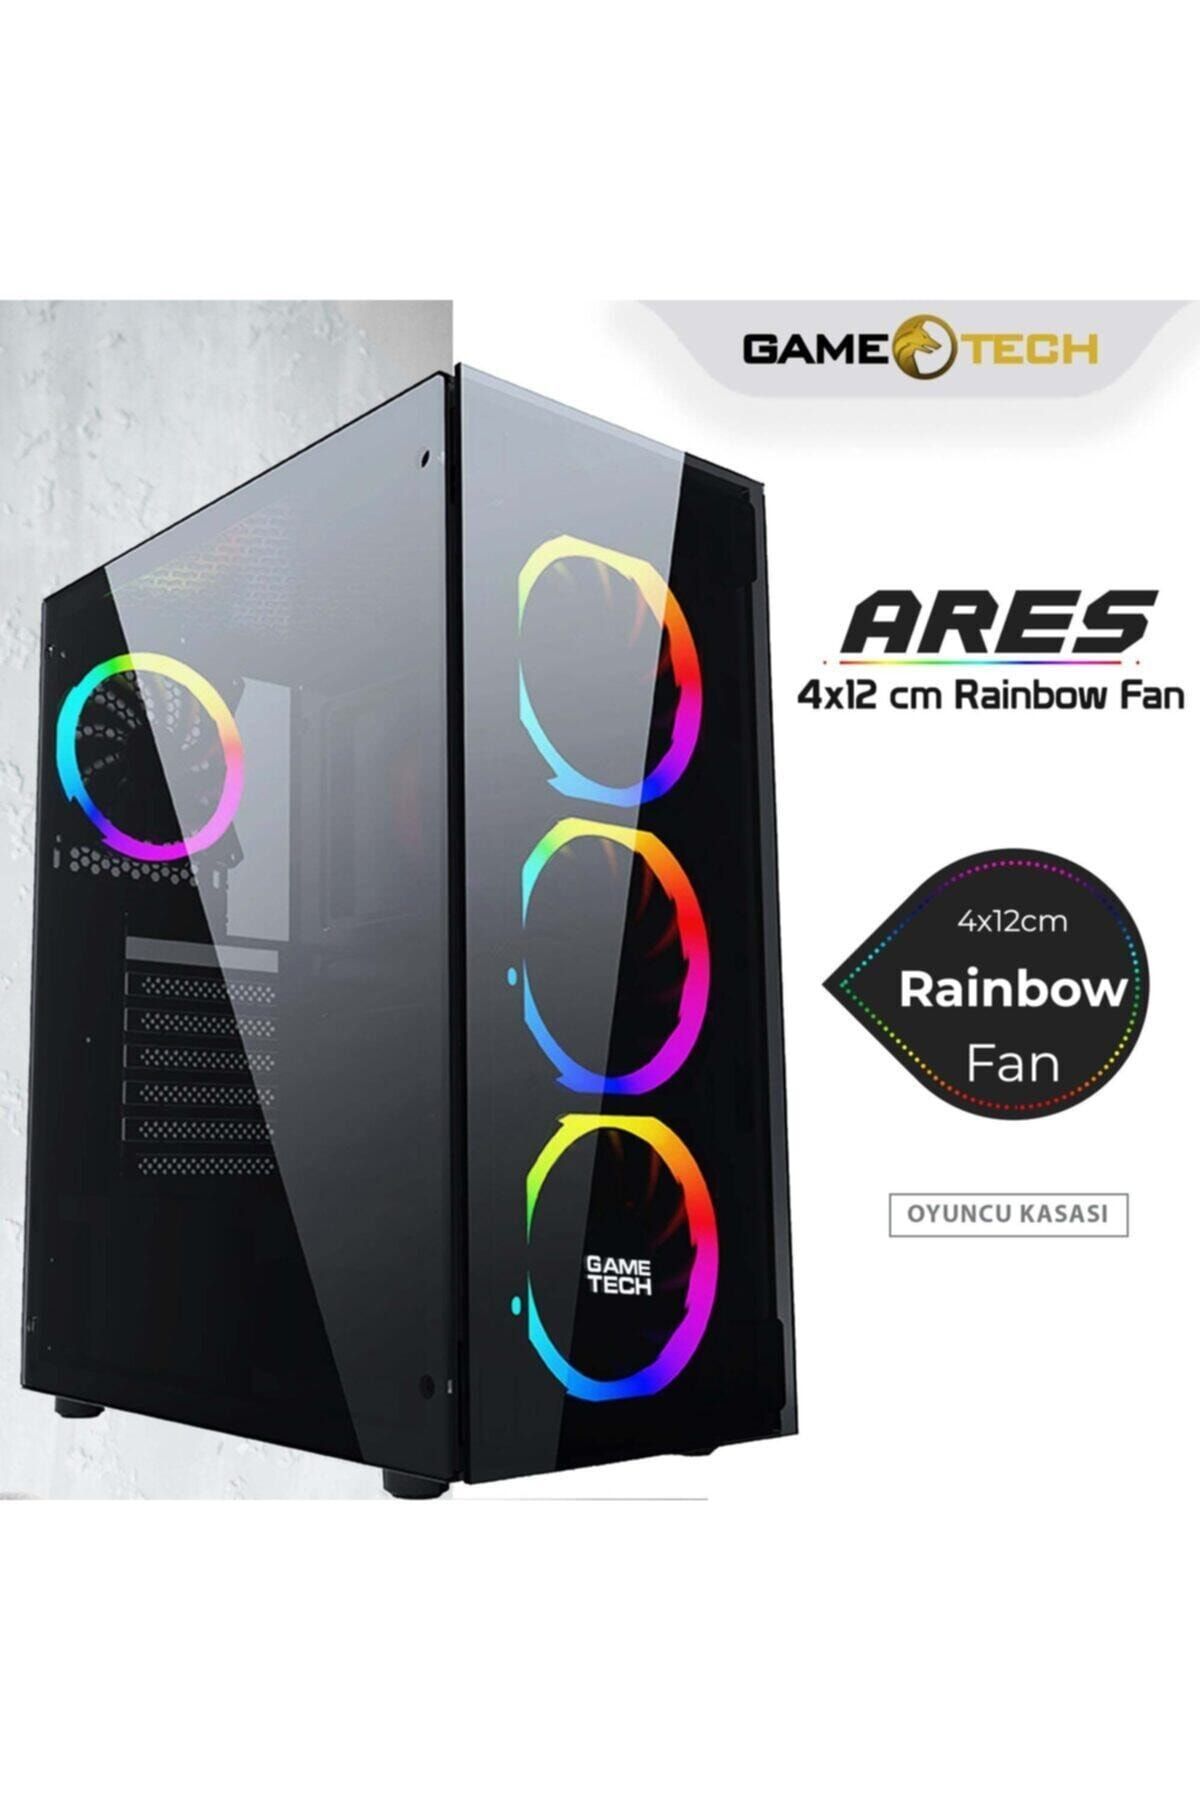 GAMETECH Ares Rainbow 4x120mm Fan Gaming Oyuncu Kasası ( Psu Yok)